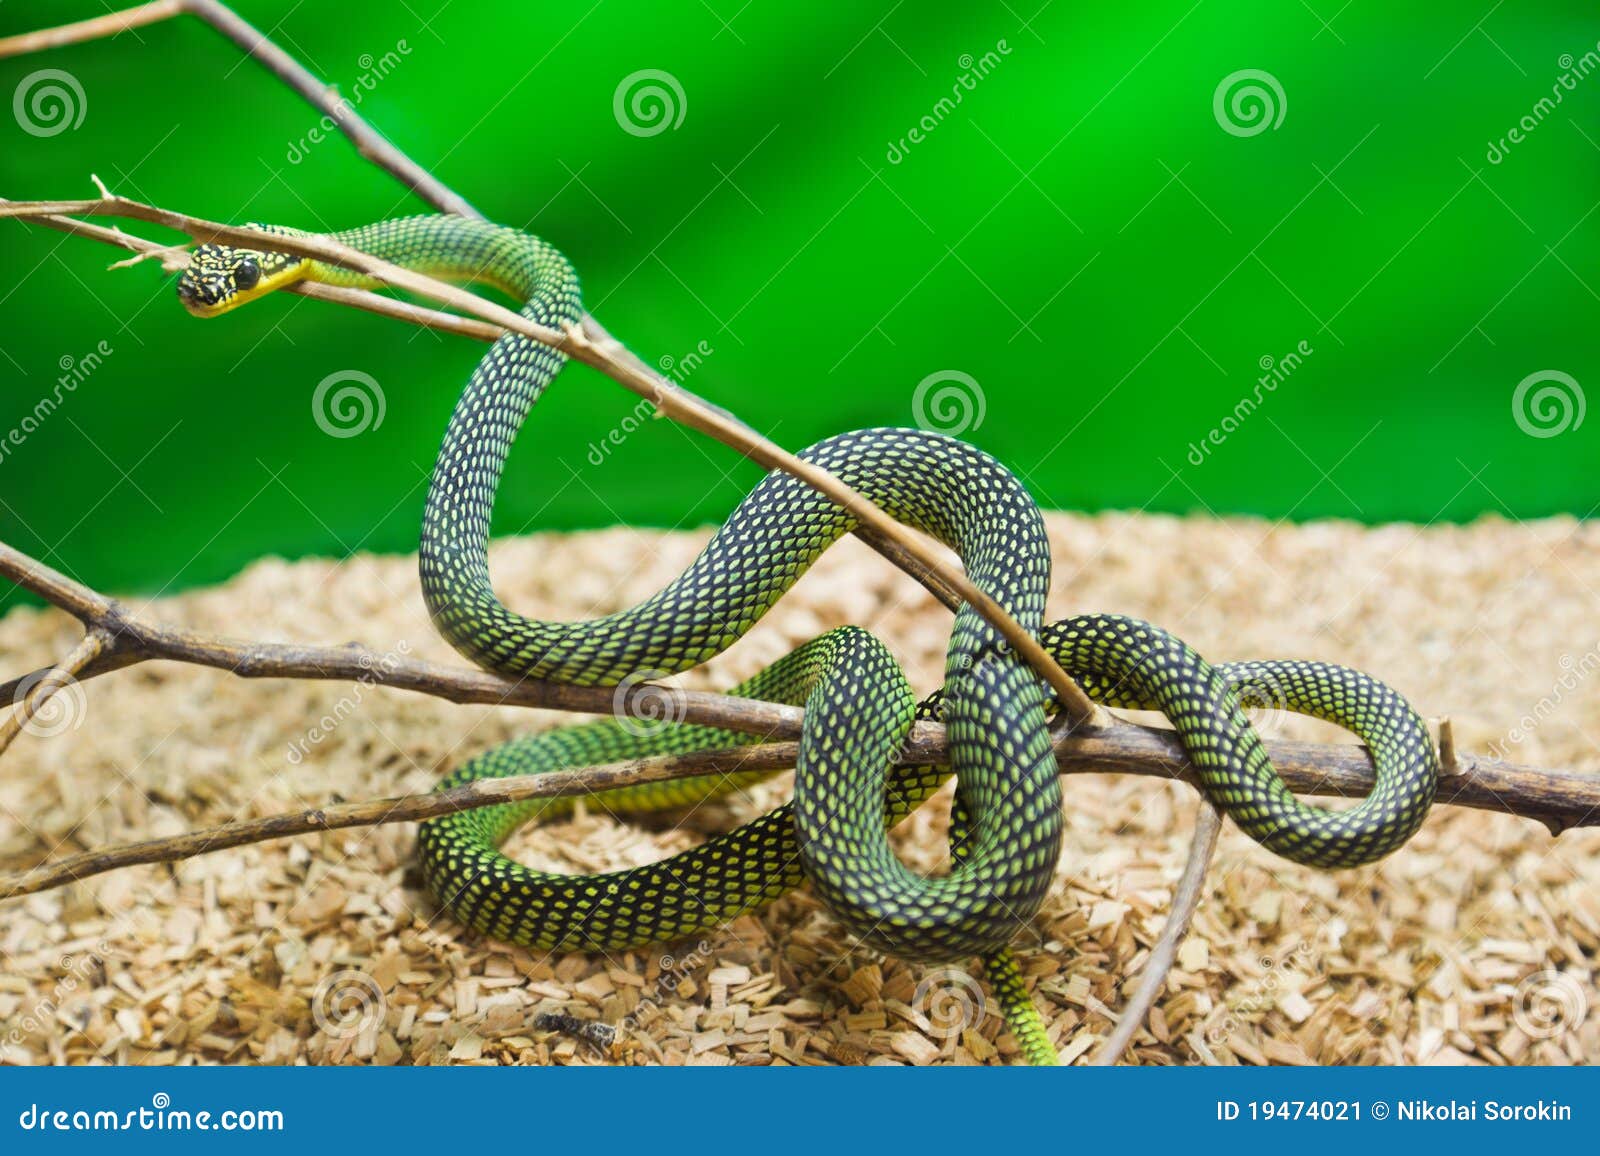 Groene slang in terrarium stock afbeelding. Image of -